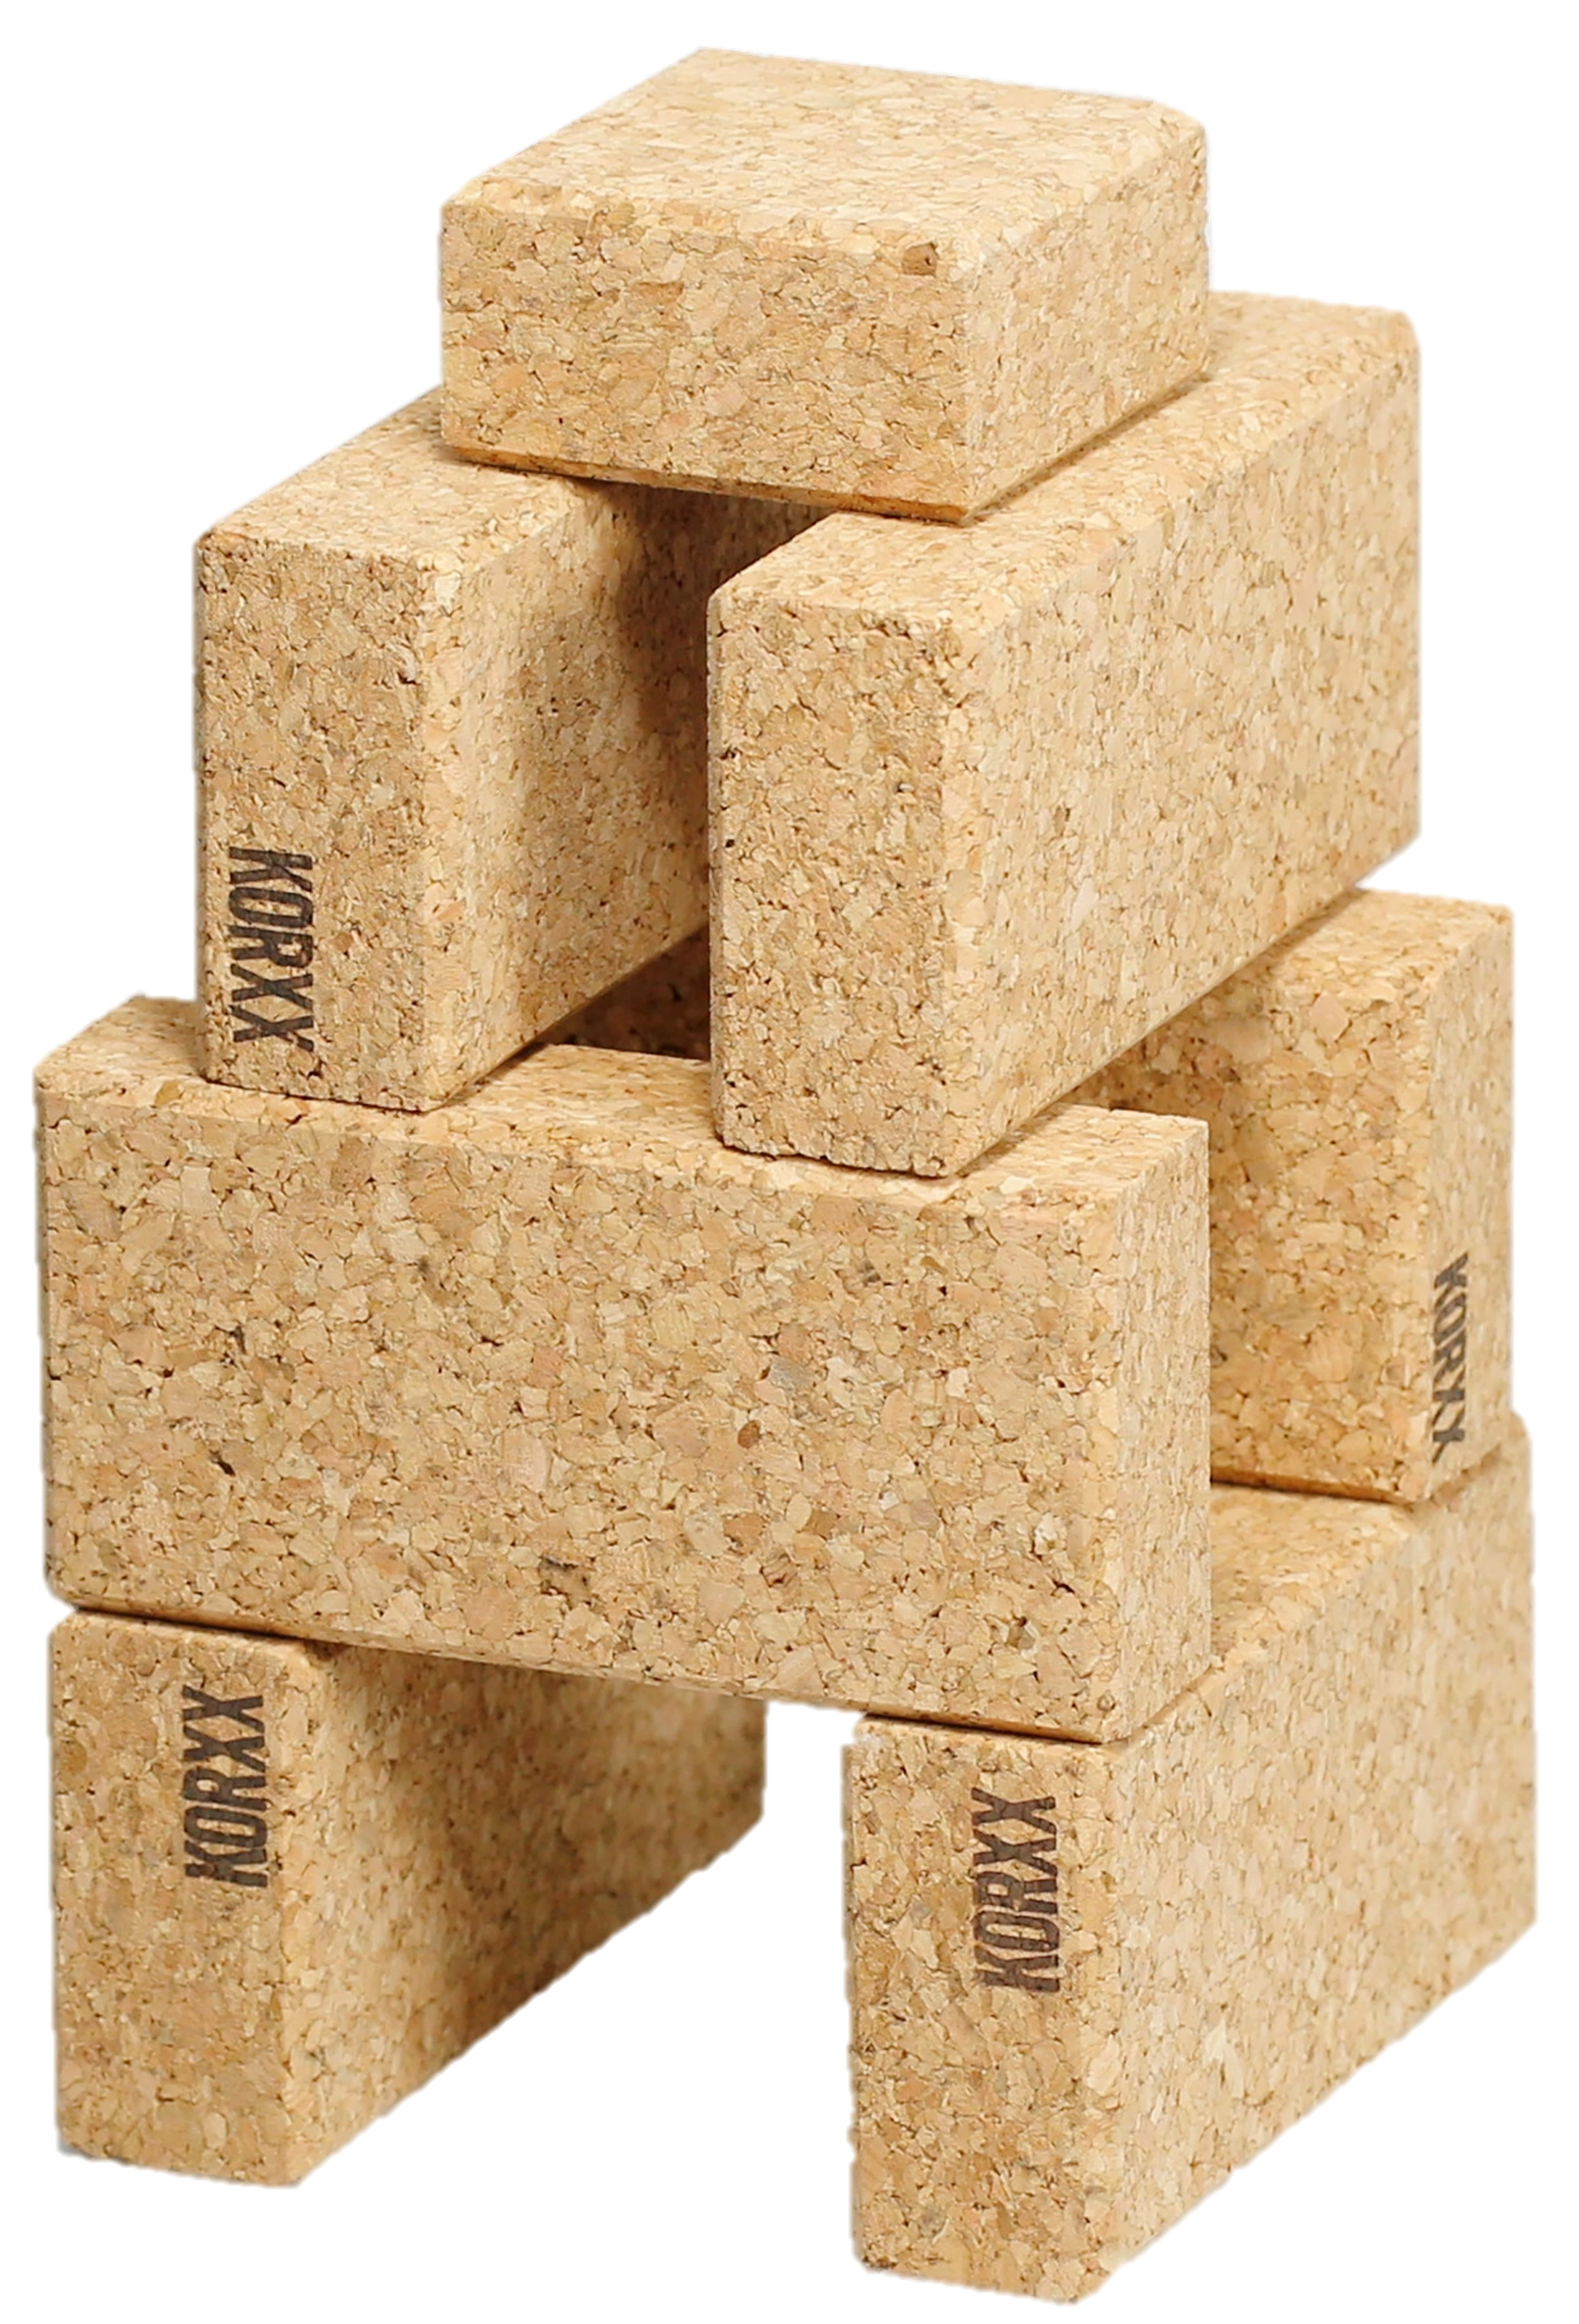 korxx_cork_toys_building_blocks_2-min